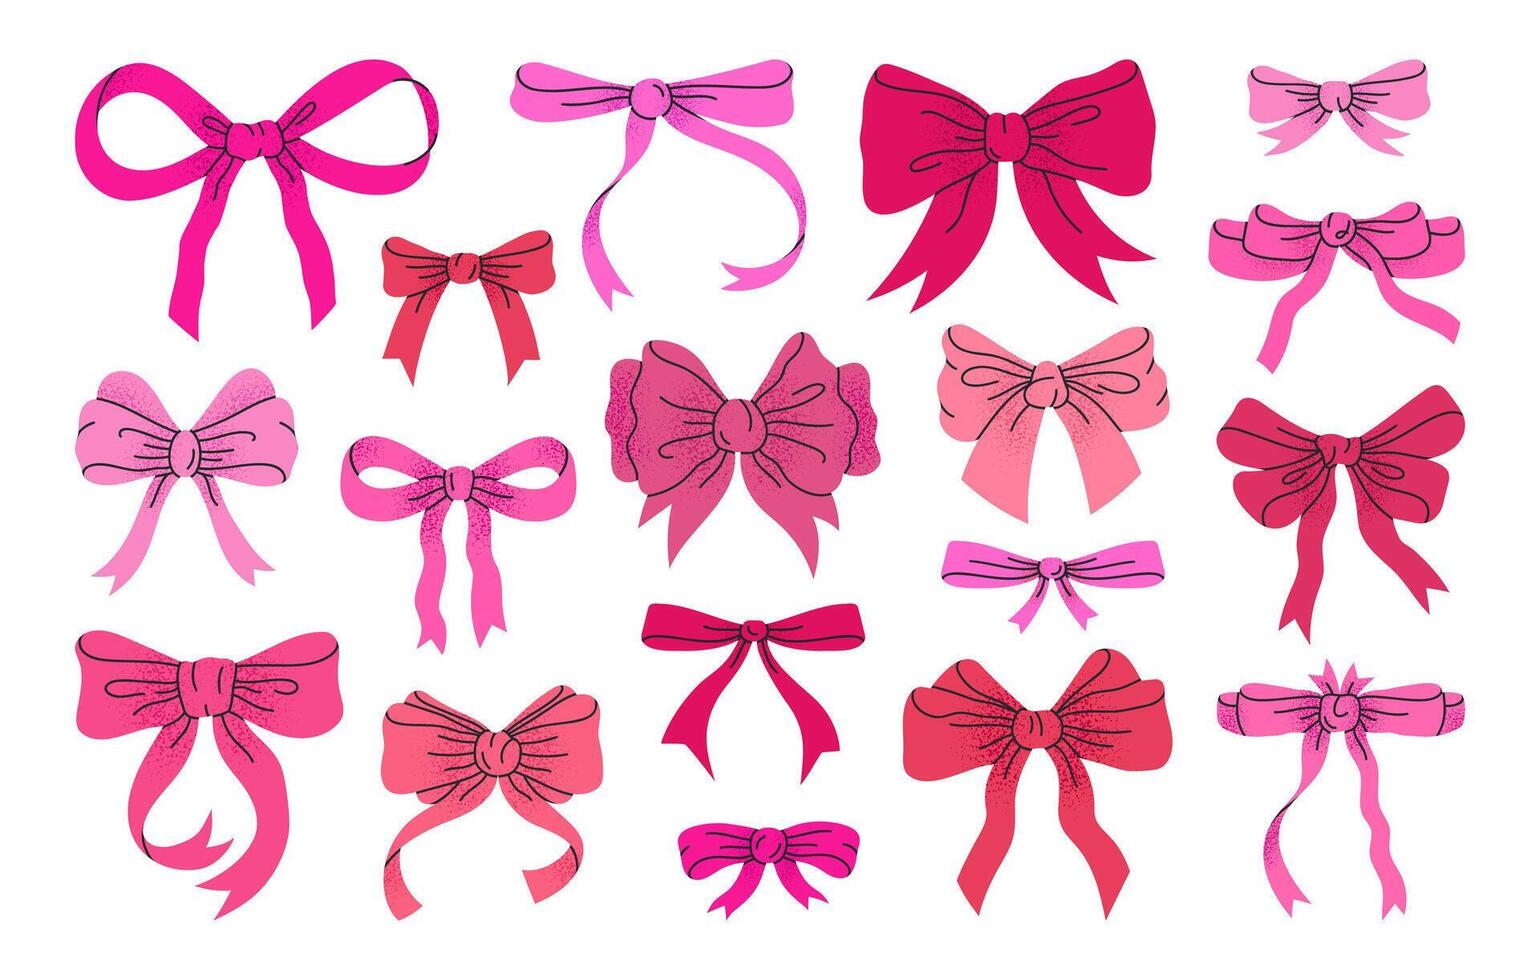 Bows set. Birthday gifts red ribbon decoration, hand drawn silk bows for holidays present box flat vector illustration collection. Cartoon bows